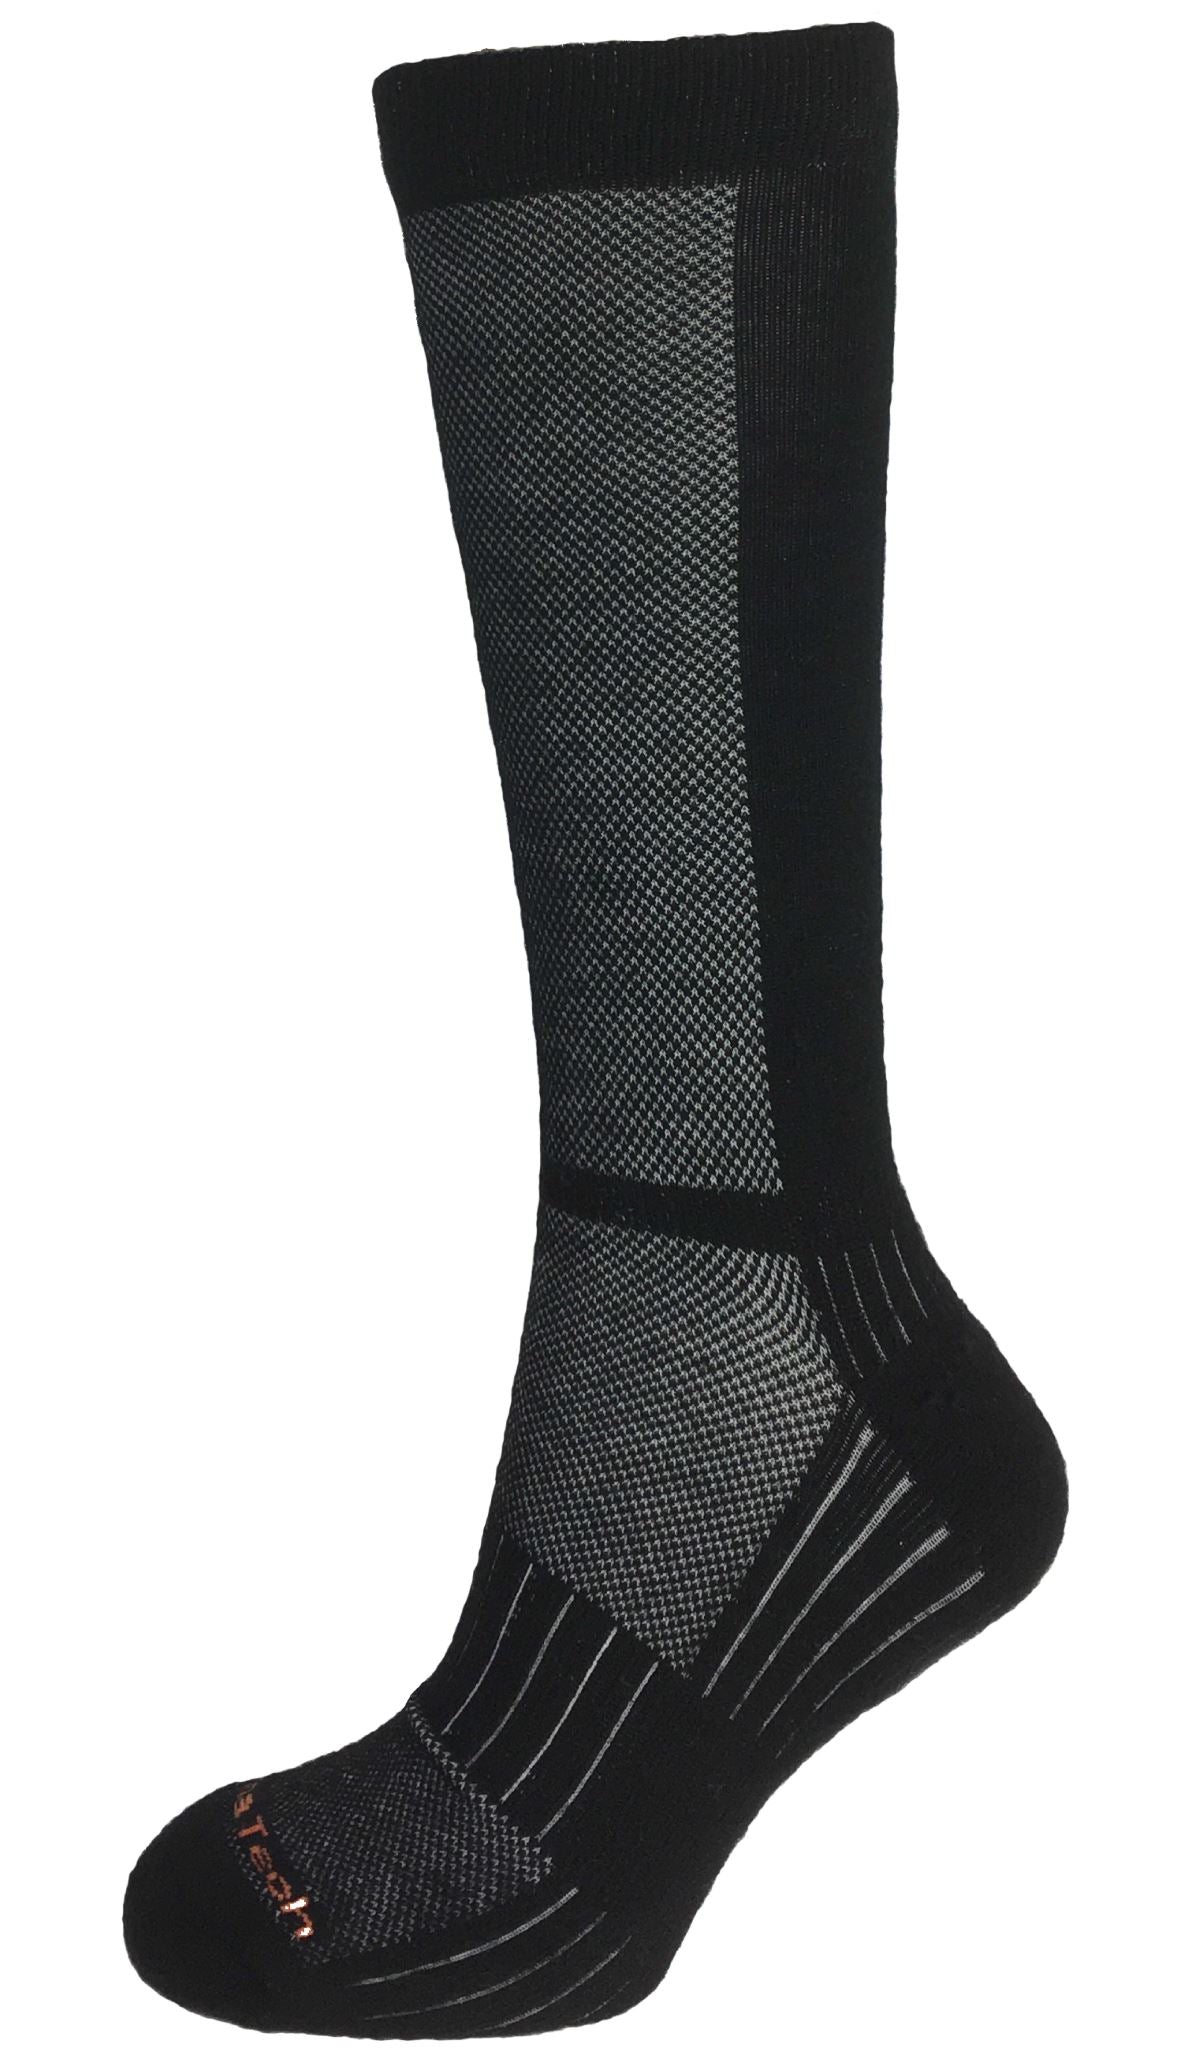 Thermatech Merino Lite Hiker Socks, Black/Grey, Size US 3-8 T33U, Unisex